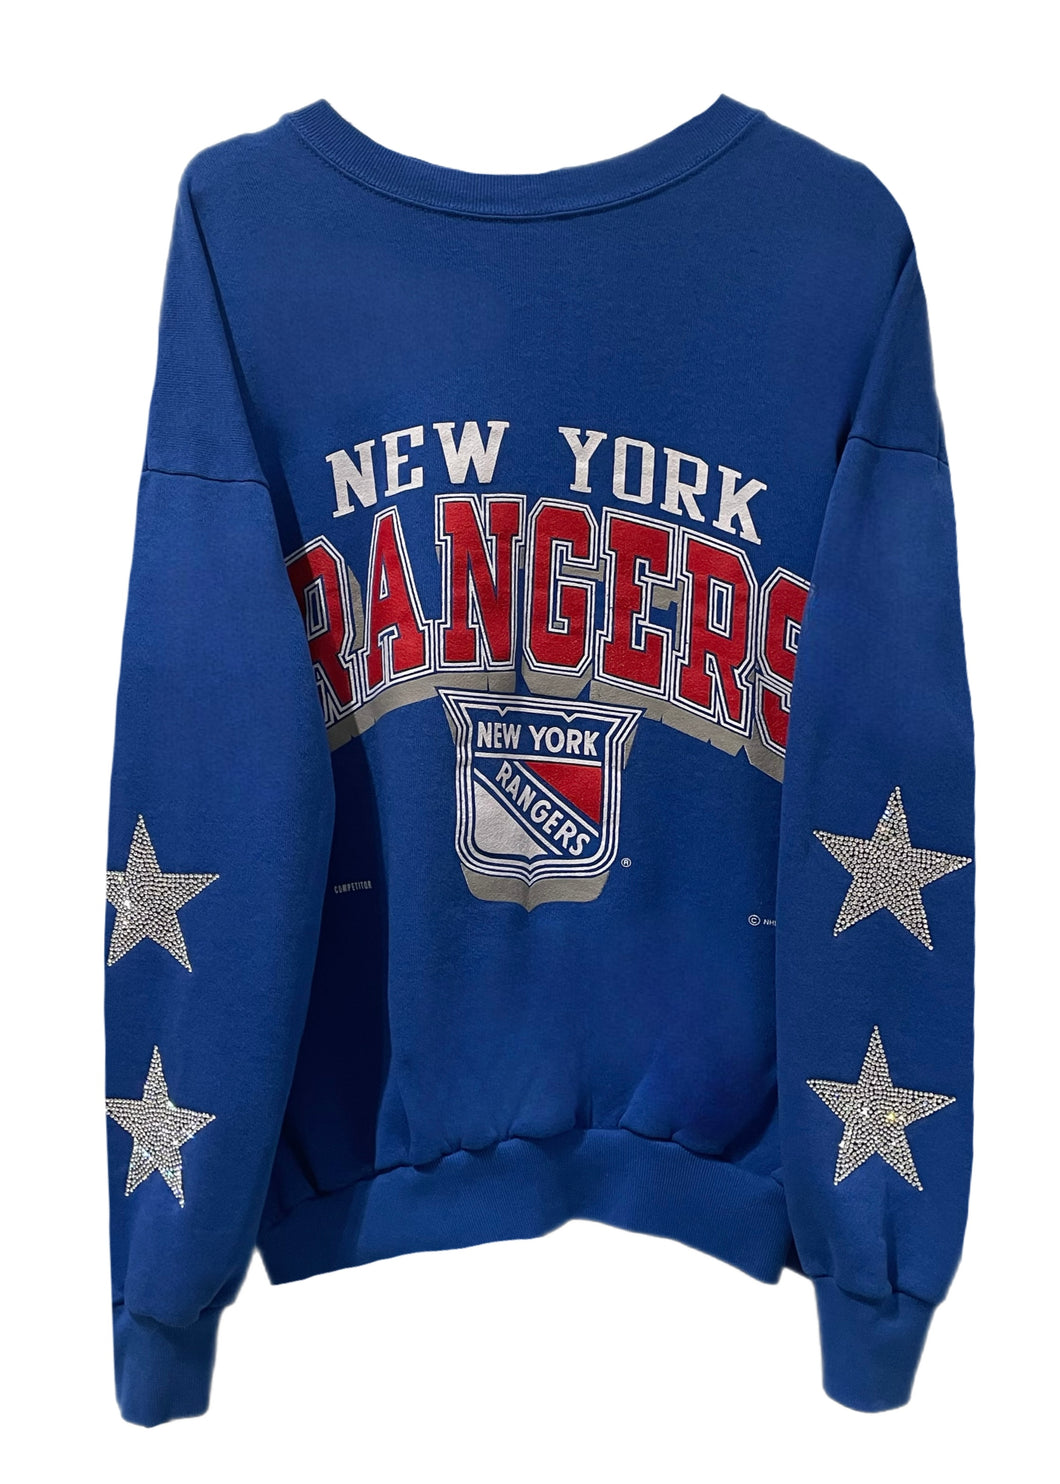 New York Rangers, Hockey One of a KIND Vintage Sweatshirt with Crystal Star Design